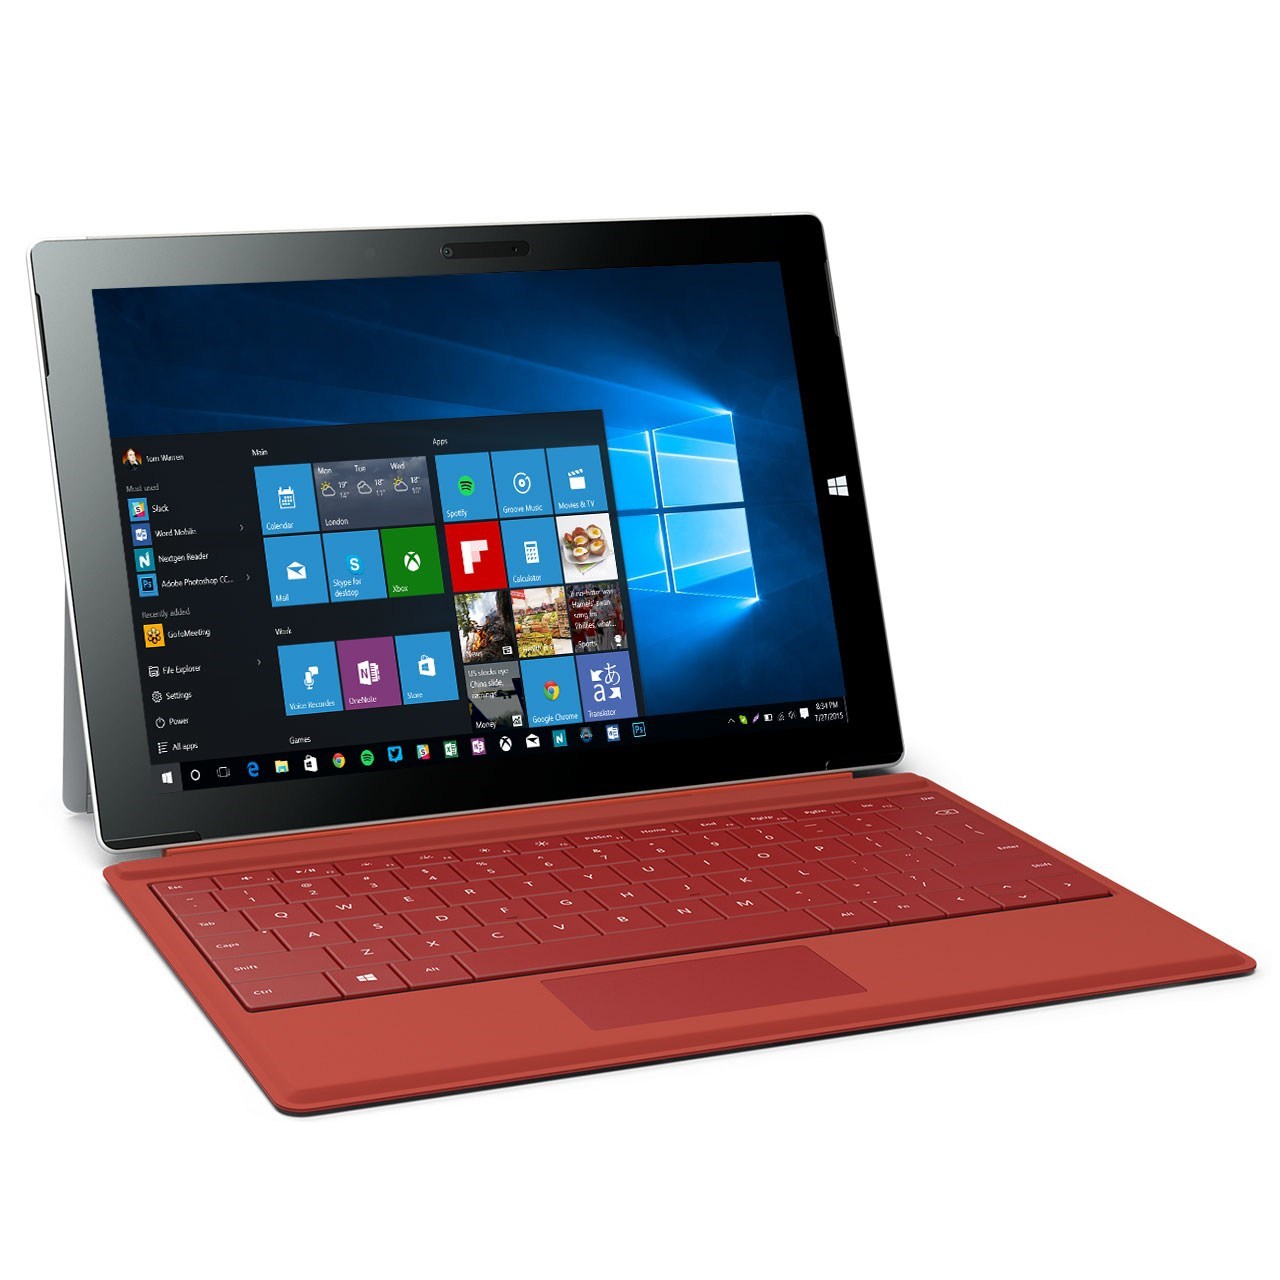 تبلت مایکروسافت مدل Surface 3 - B به همراه کیبورد ظرفیت 128 گیگابایت